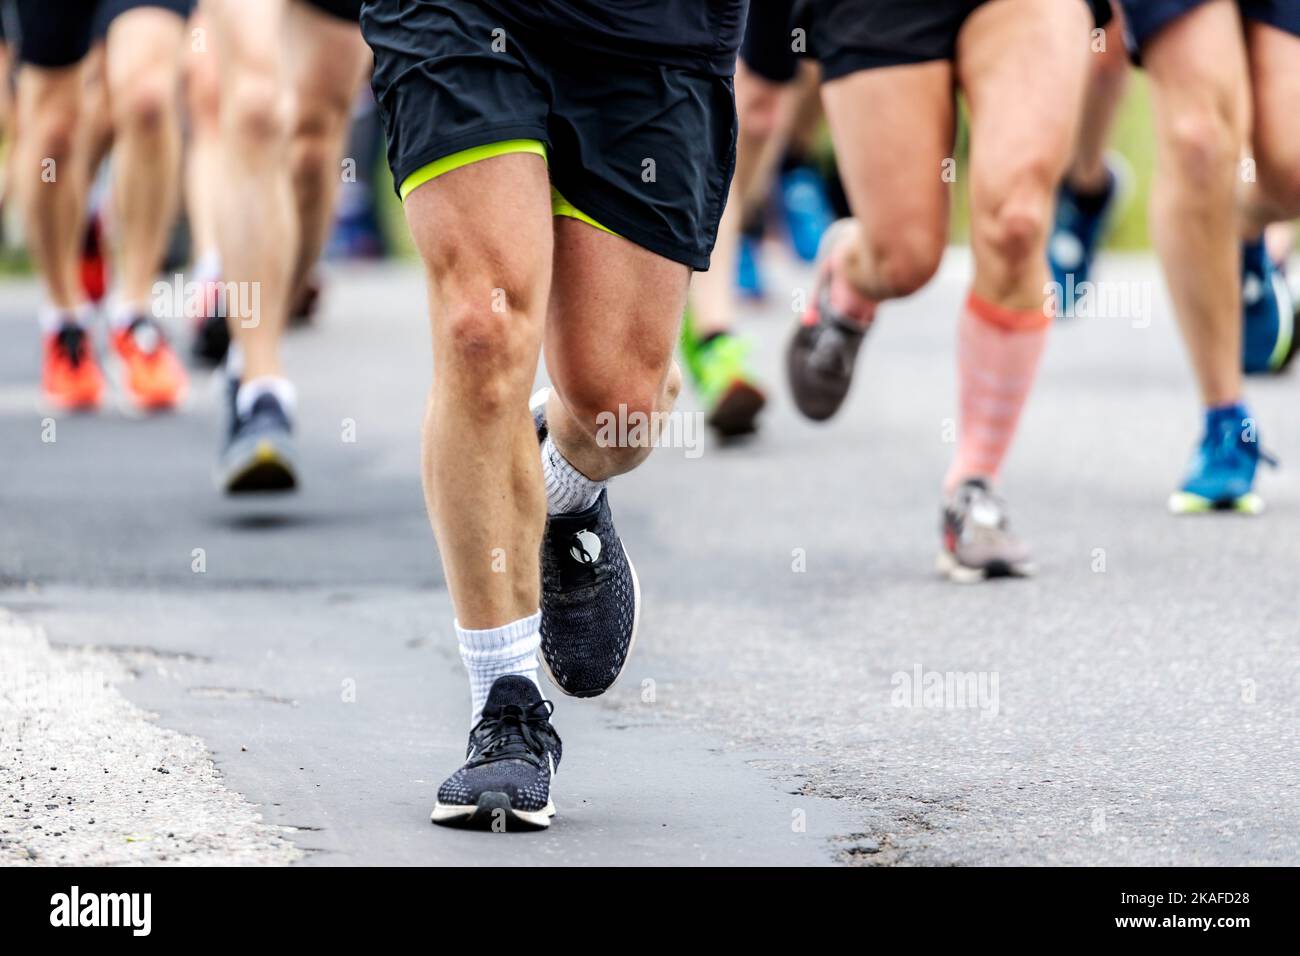 runners in marathon race Stock Photo